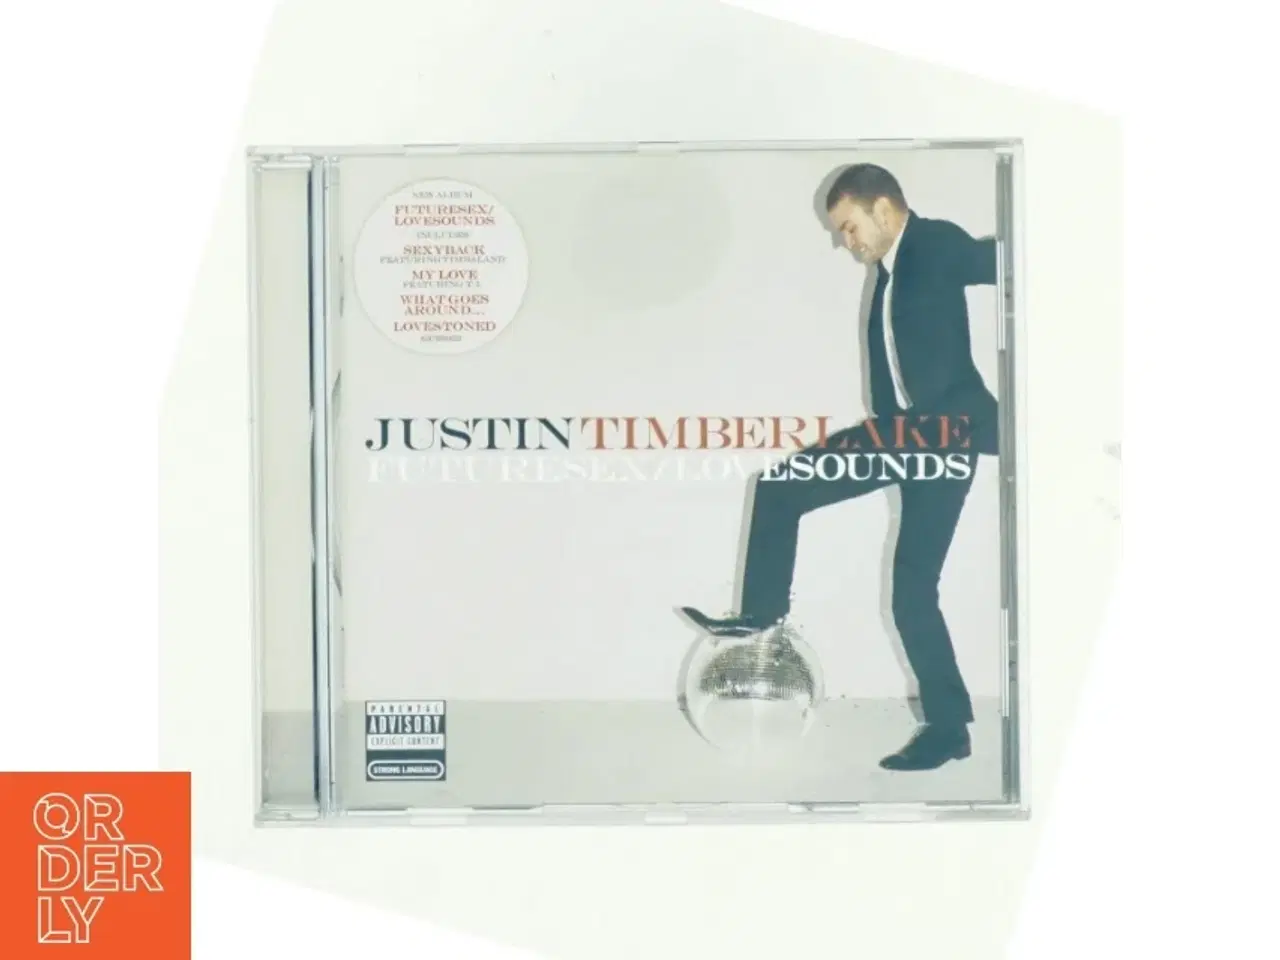 Billede 1 - FutureSex/LoveSounds Studio album by Justin Timberlake